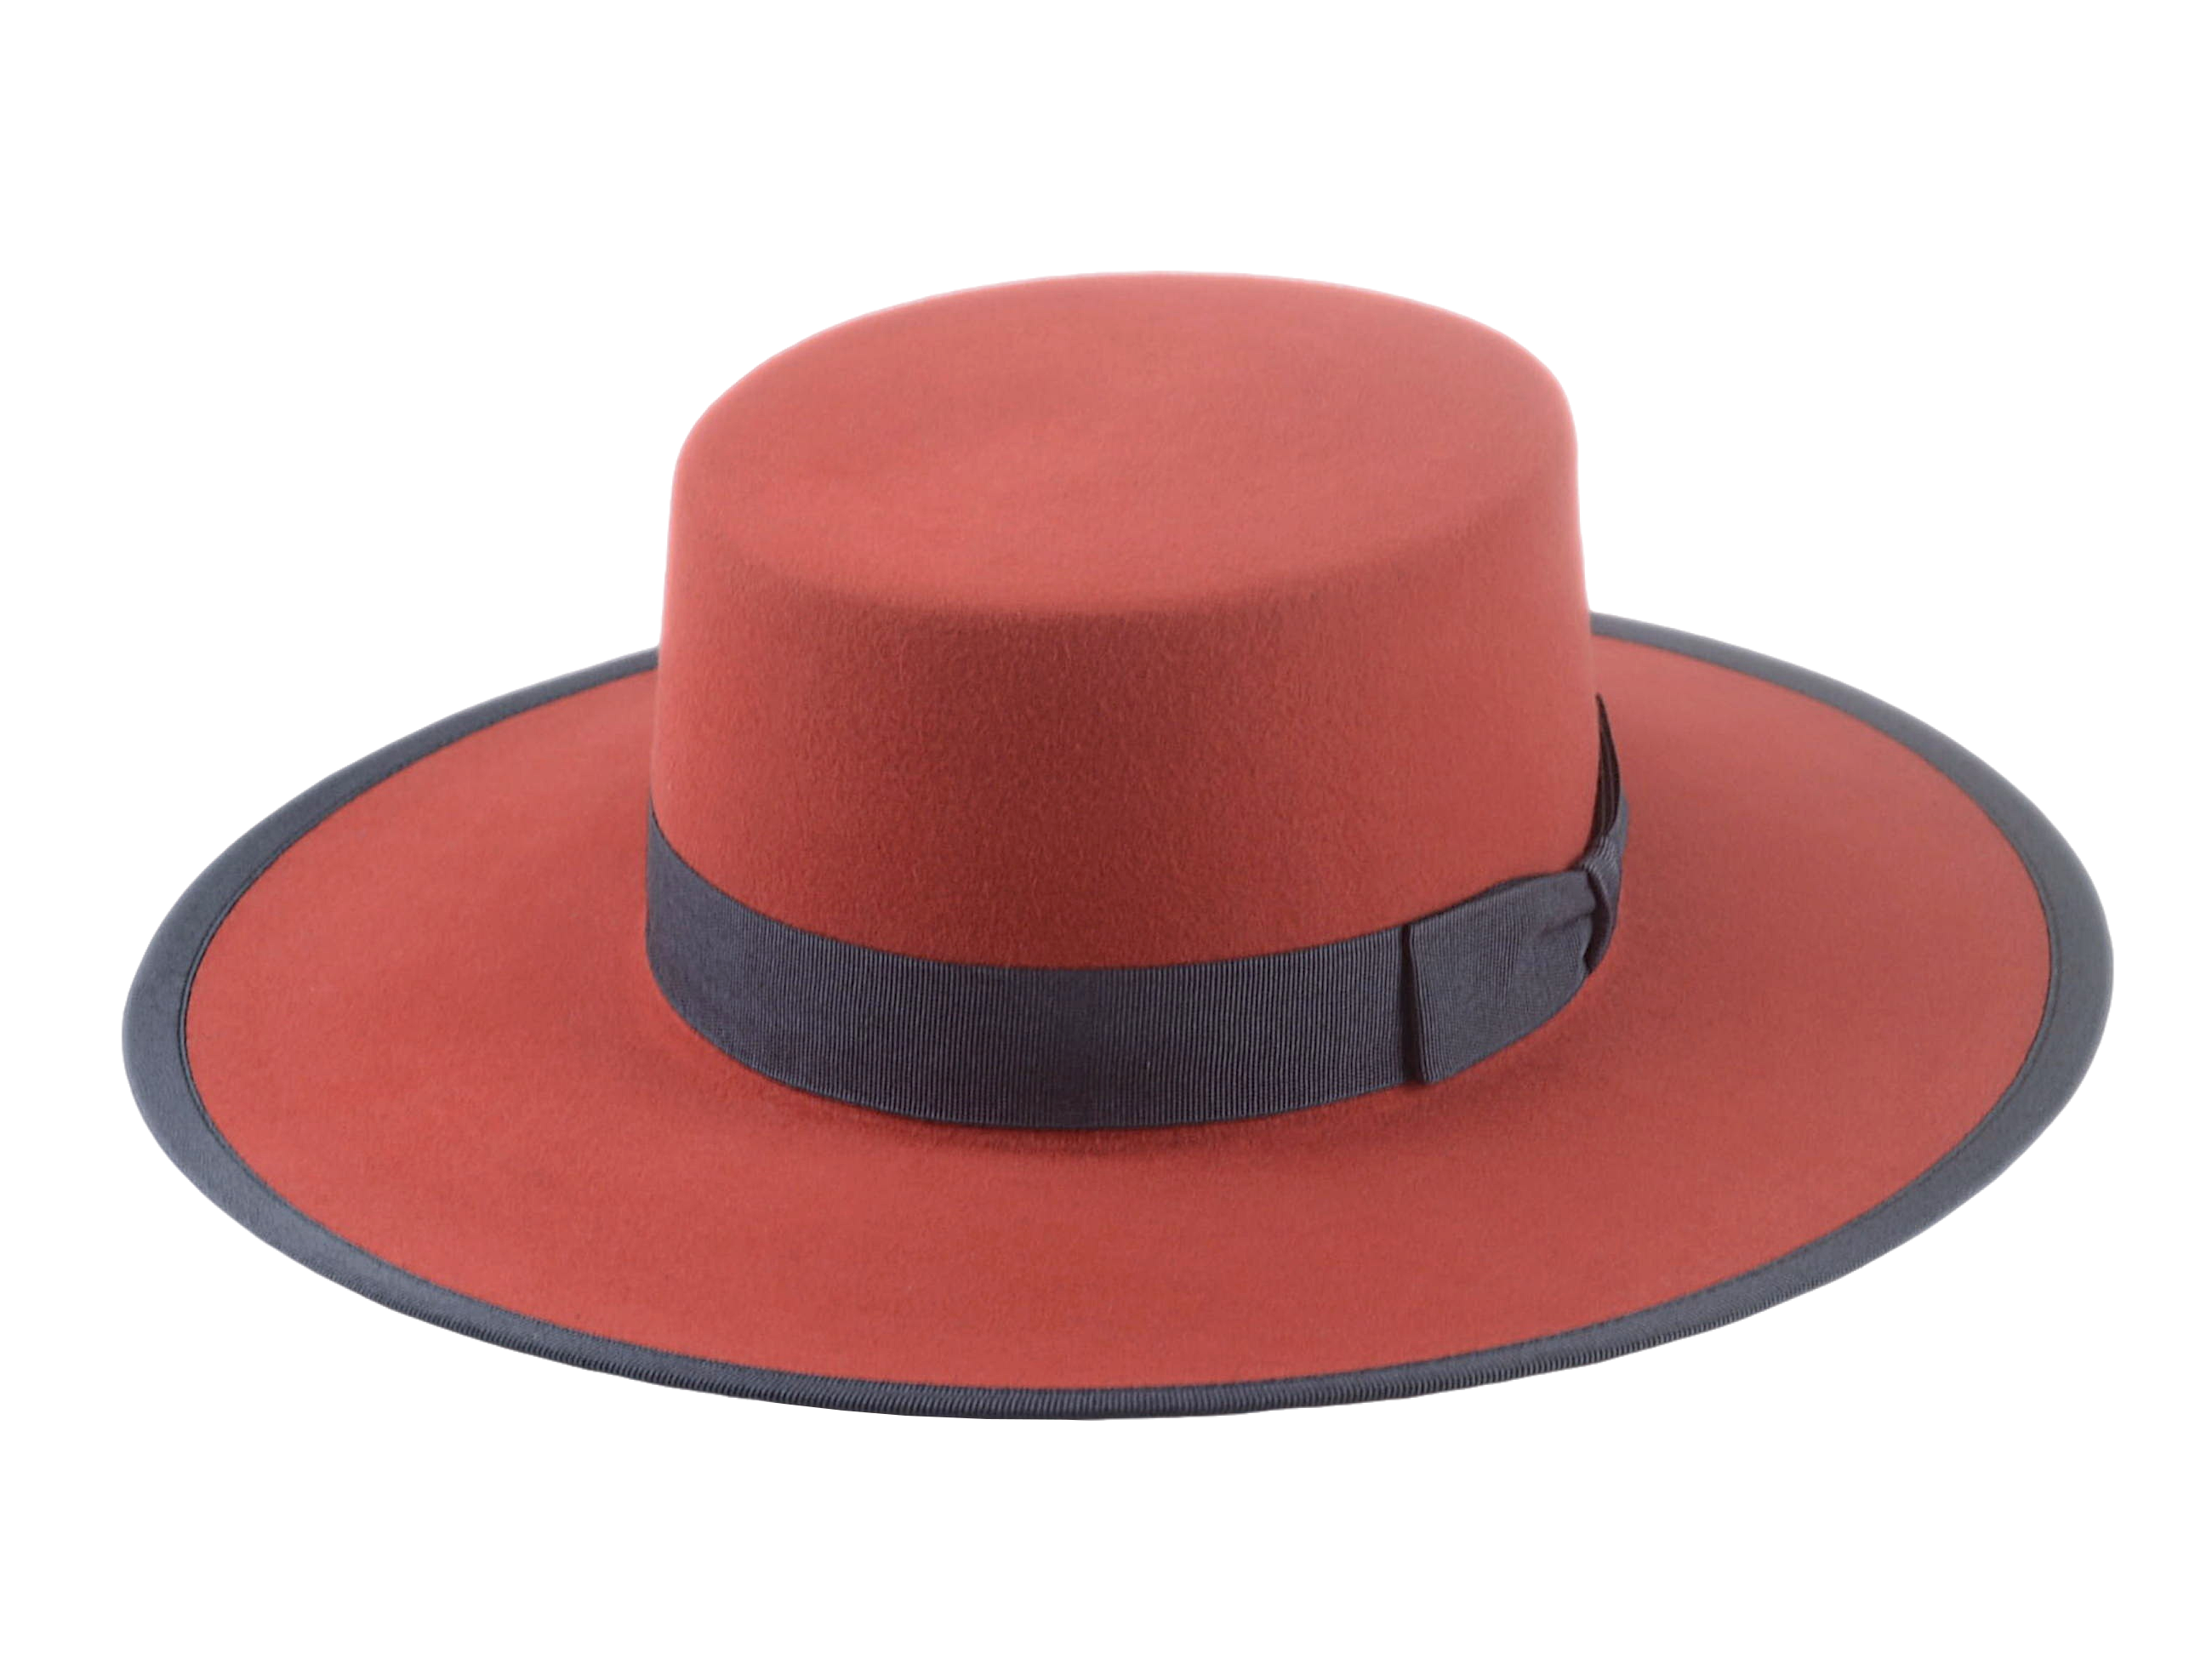 The TOWER | Agnoulita Custom Handmade Hats Agnoulita Hats 1 | Poppy Red, Rabbit fur felt, Western Style